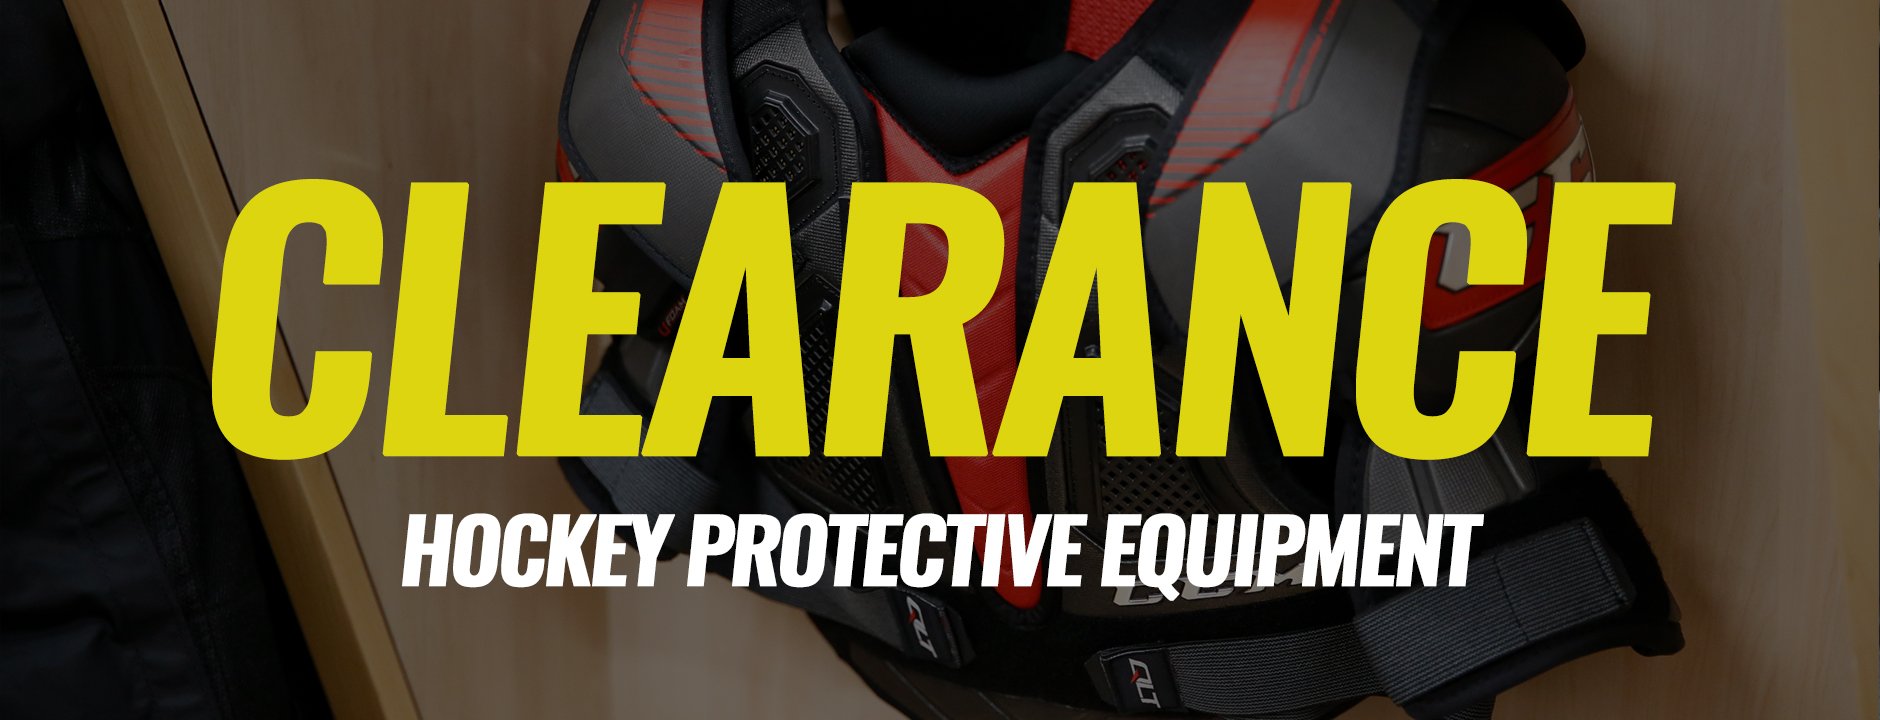 Clearance Protective Hockey Equipment